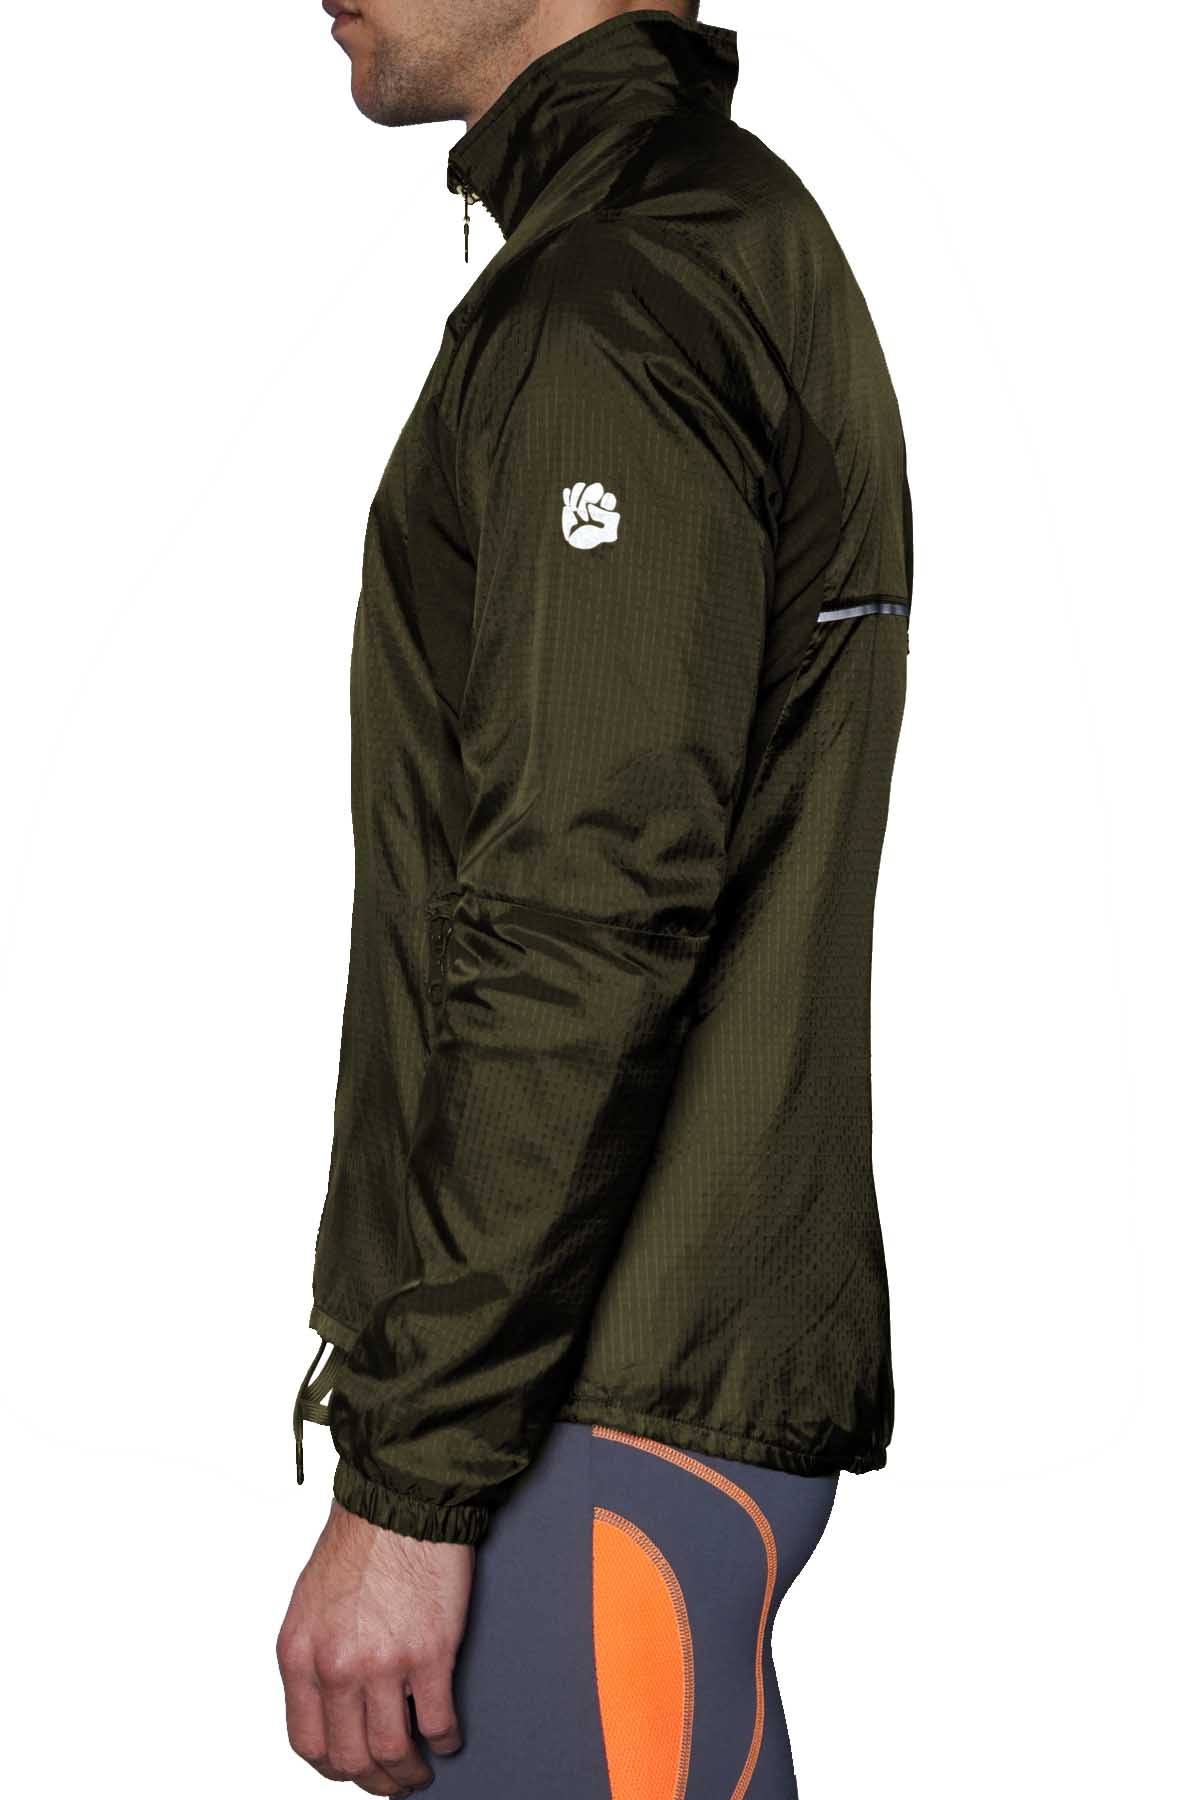 C-IN2 Grey/Green Grip Athletic Zip Jacket